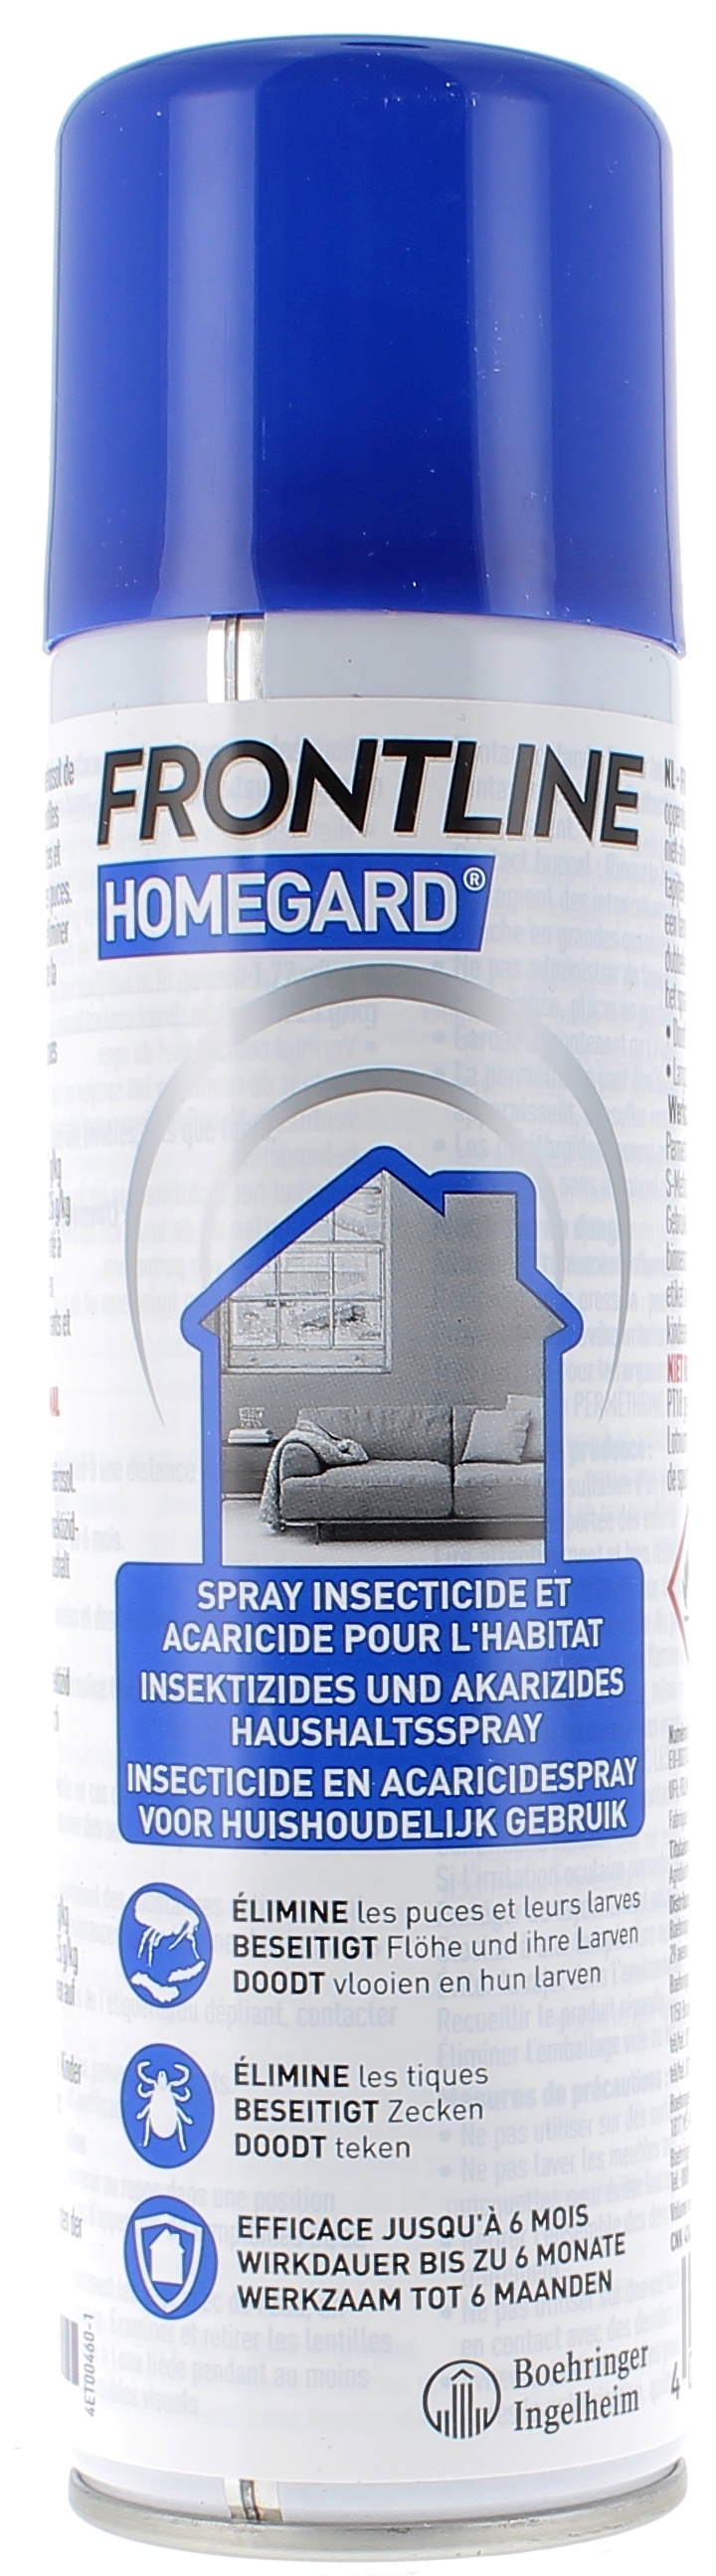 Homegard Spray insecticide et acaricide habitat Frontline - traitement anti -parasitaire